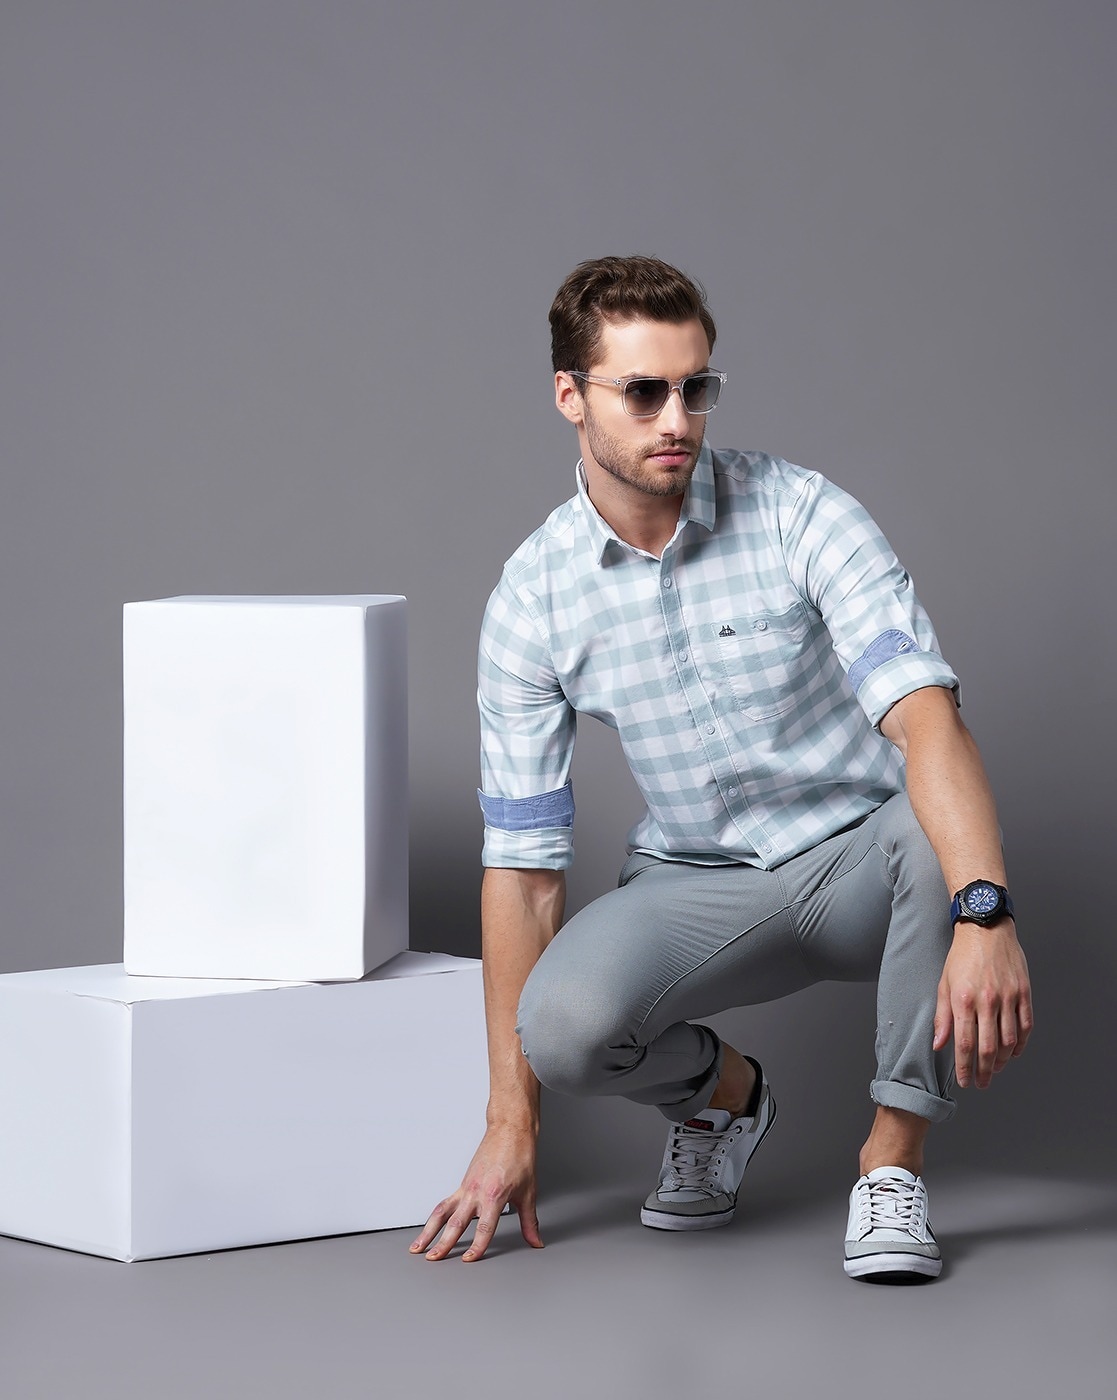 10 Grey Pant Matching Shirts Ideas - A Modern Men's Guide